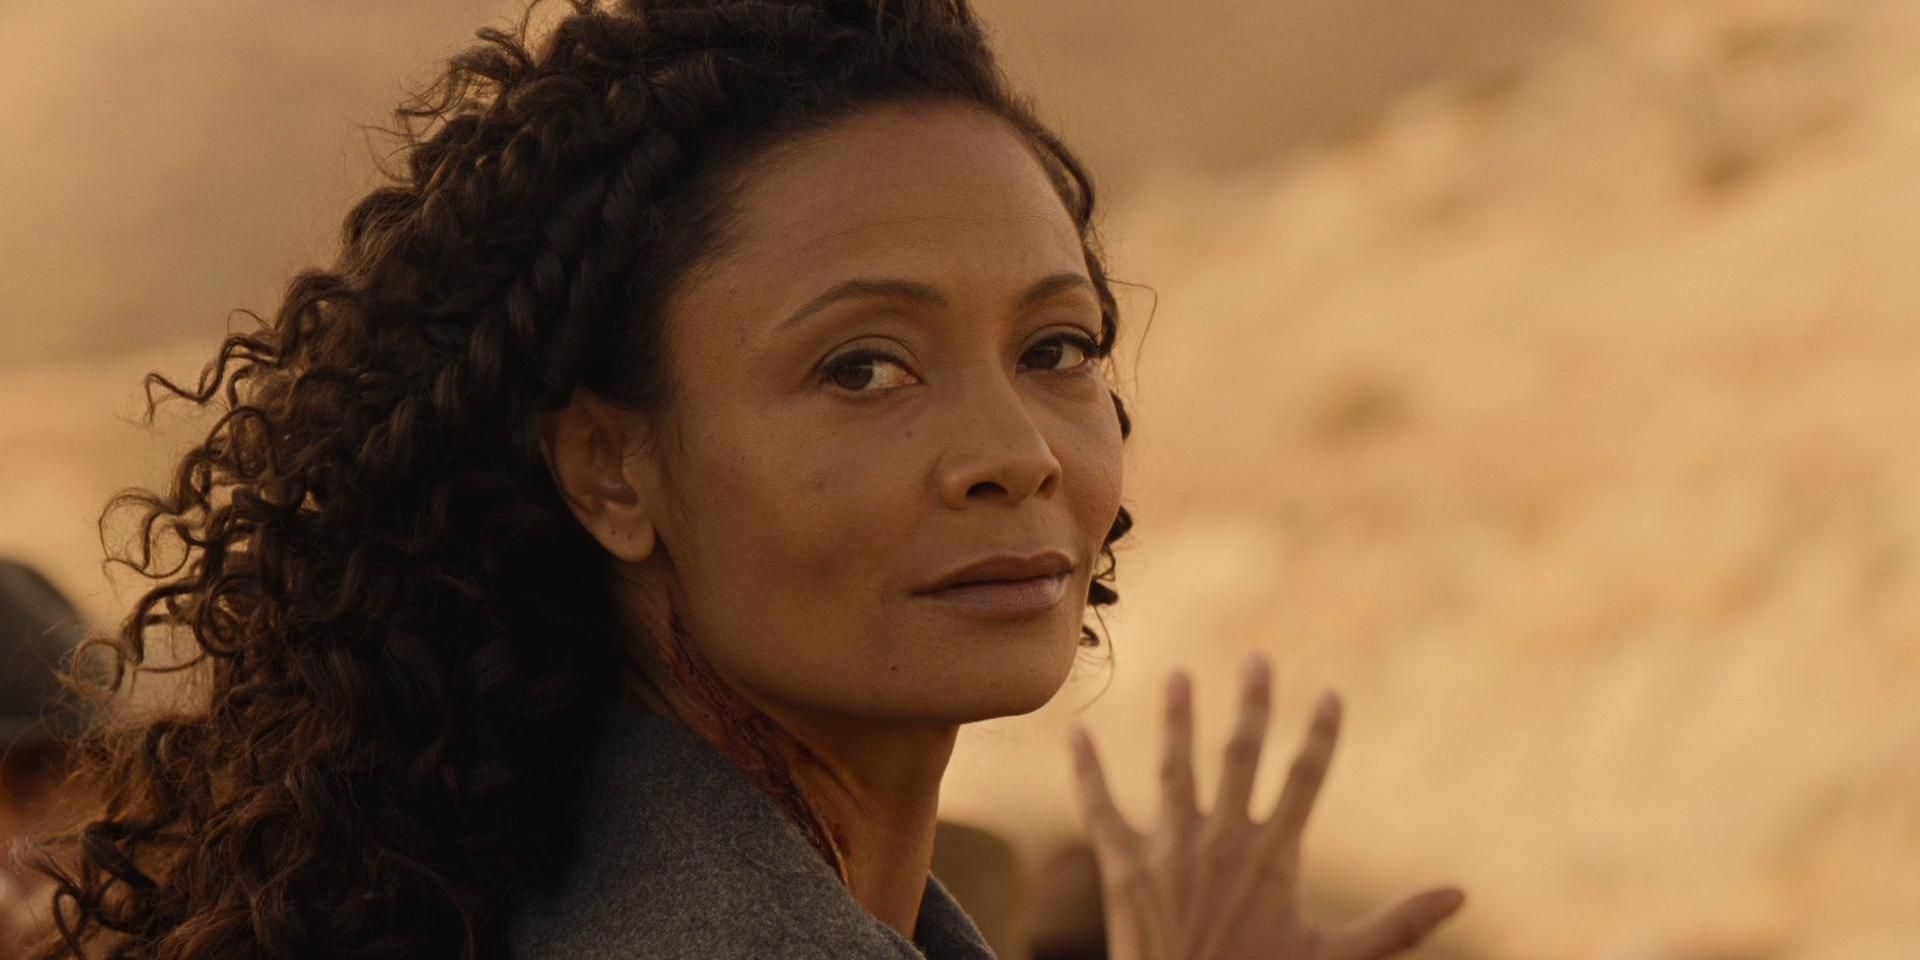 Thandiwe Newton as Maeve in season 2 of Westworld